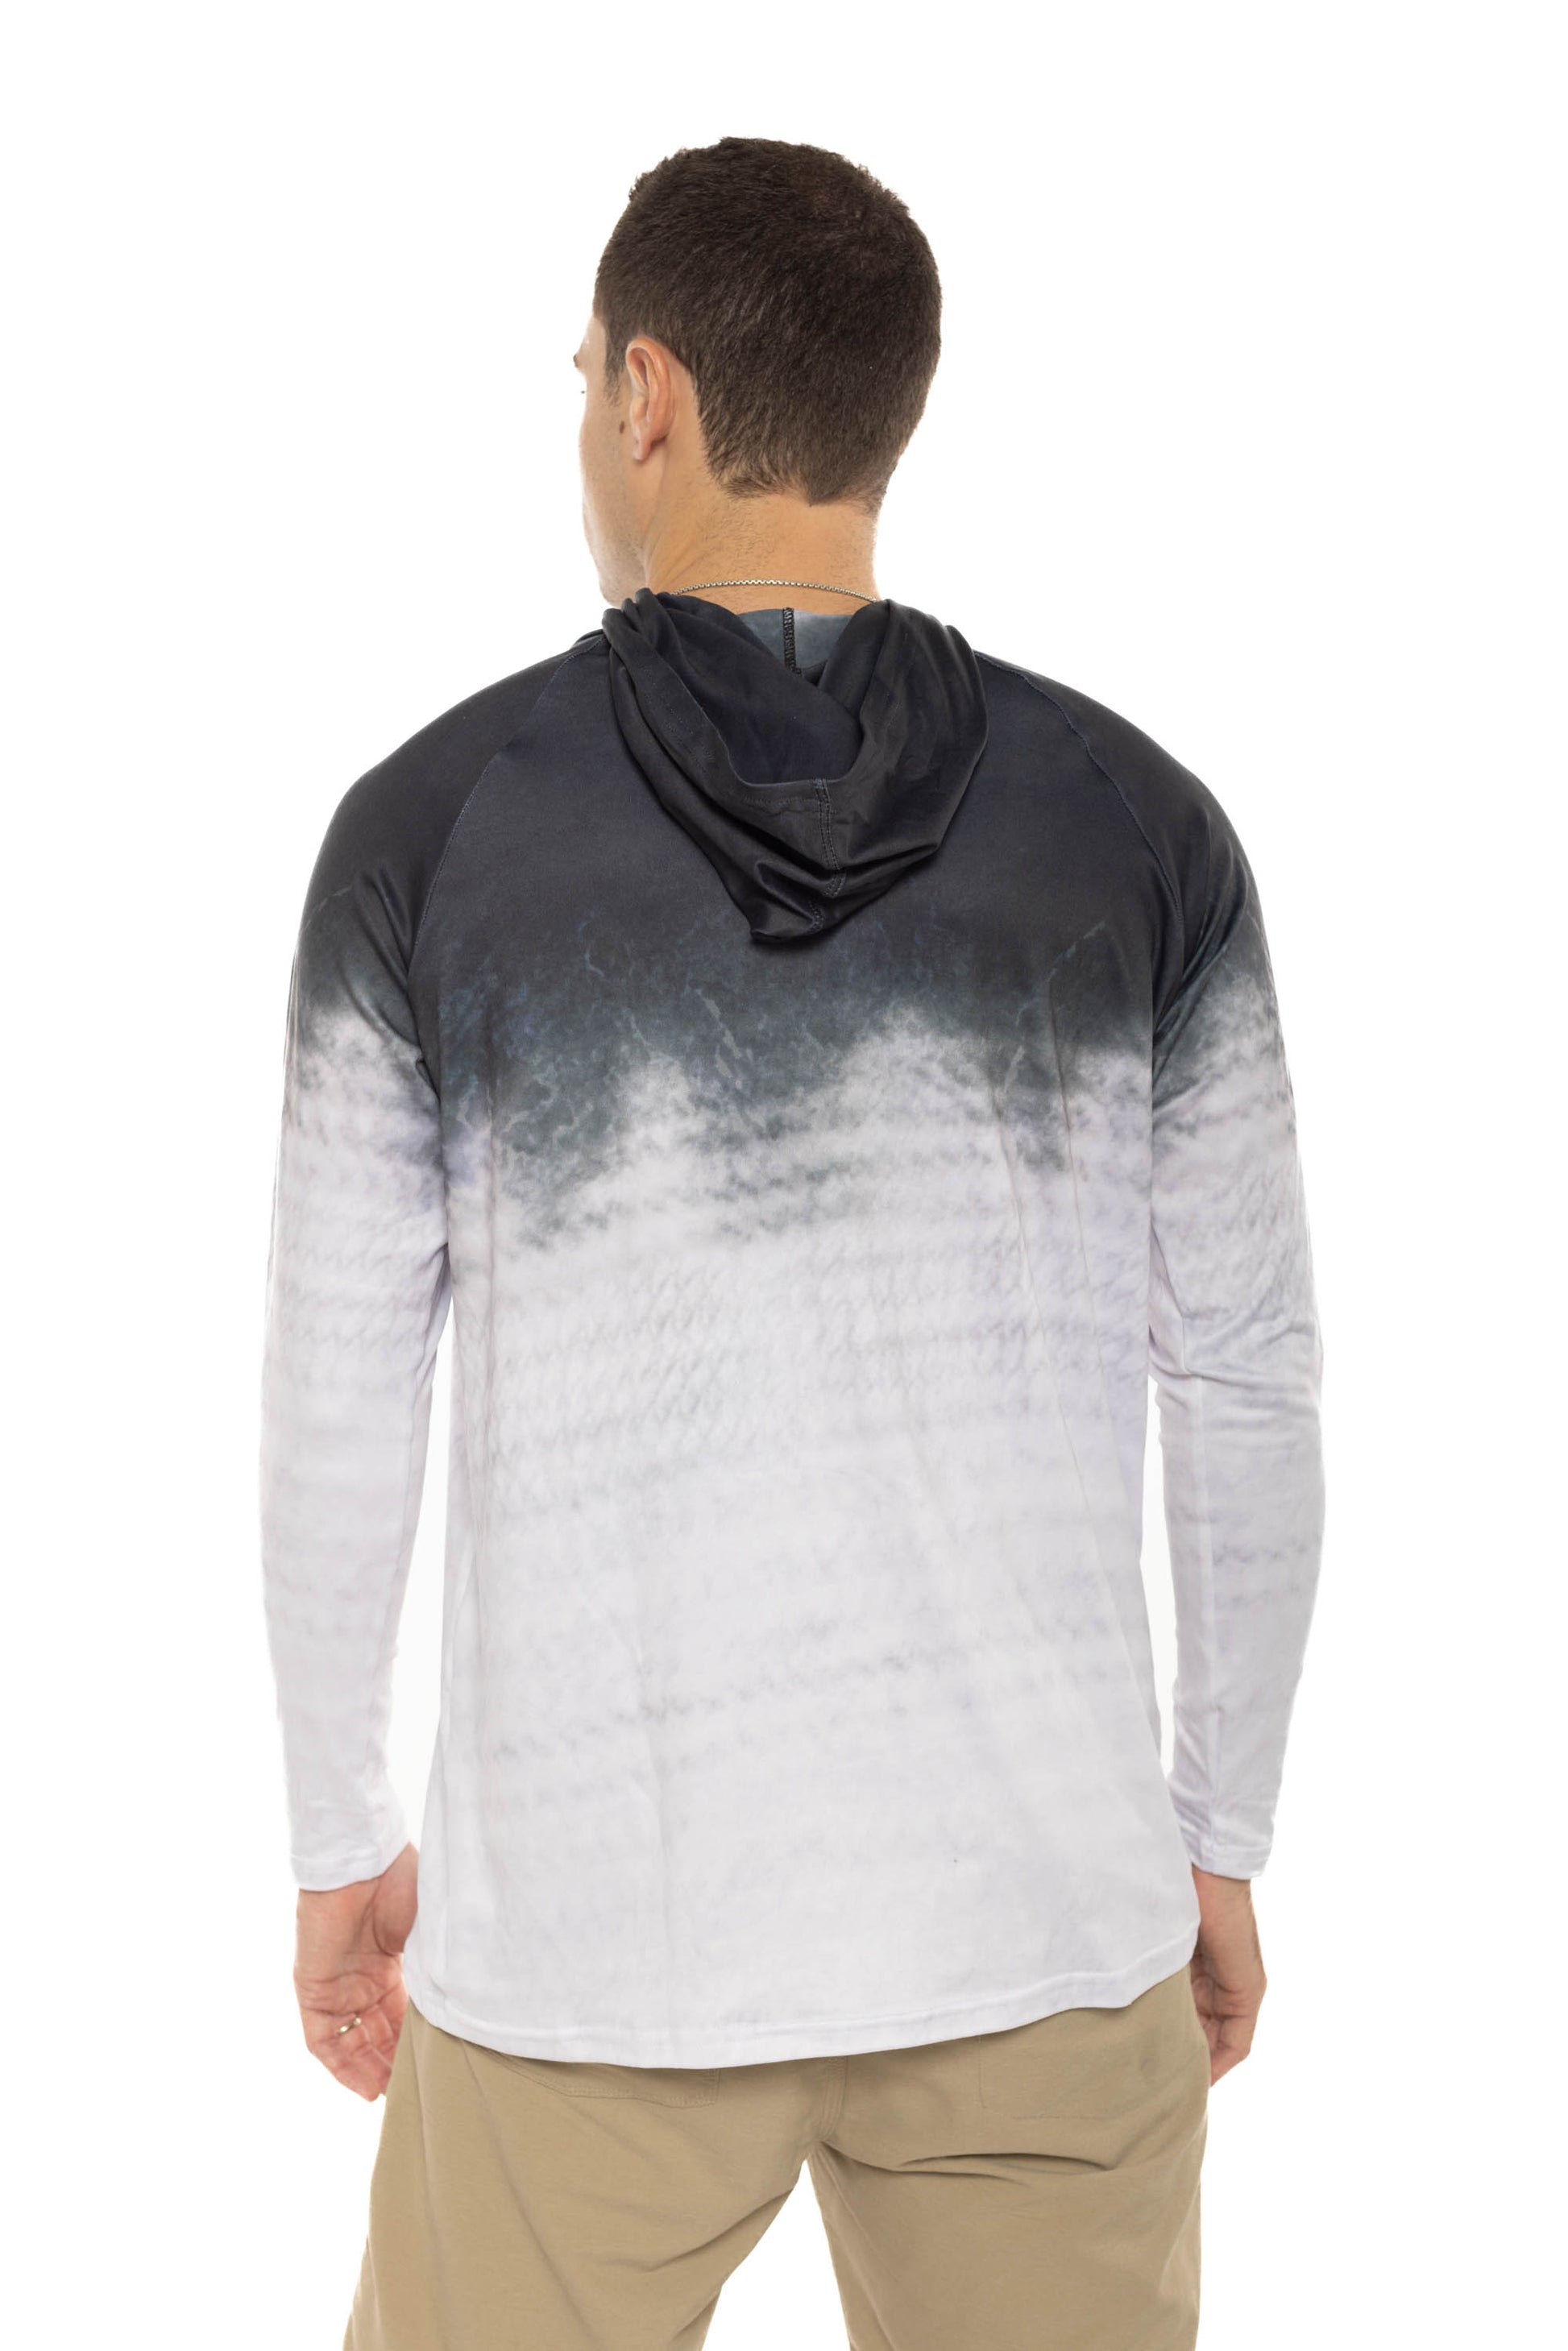 Bonefish - Men's Hooded Performance Fishing Shirt - Best Sun Shirts - Multi-Seasonal - UPF 50+ - Long Sleeve Fishing Shirt - Small